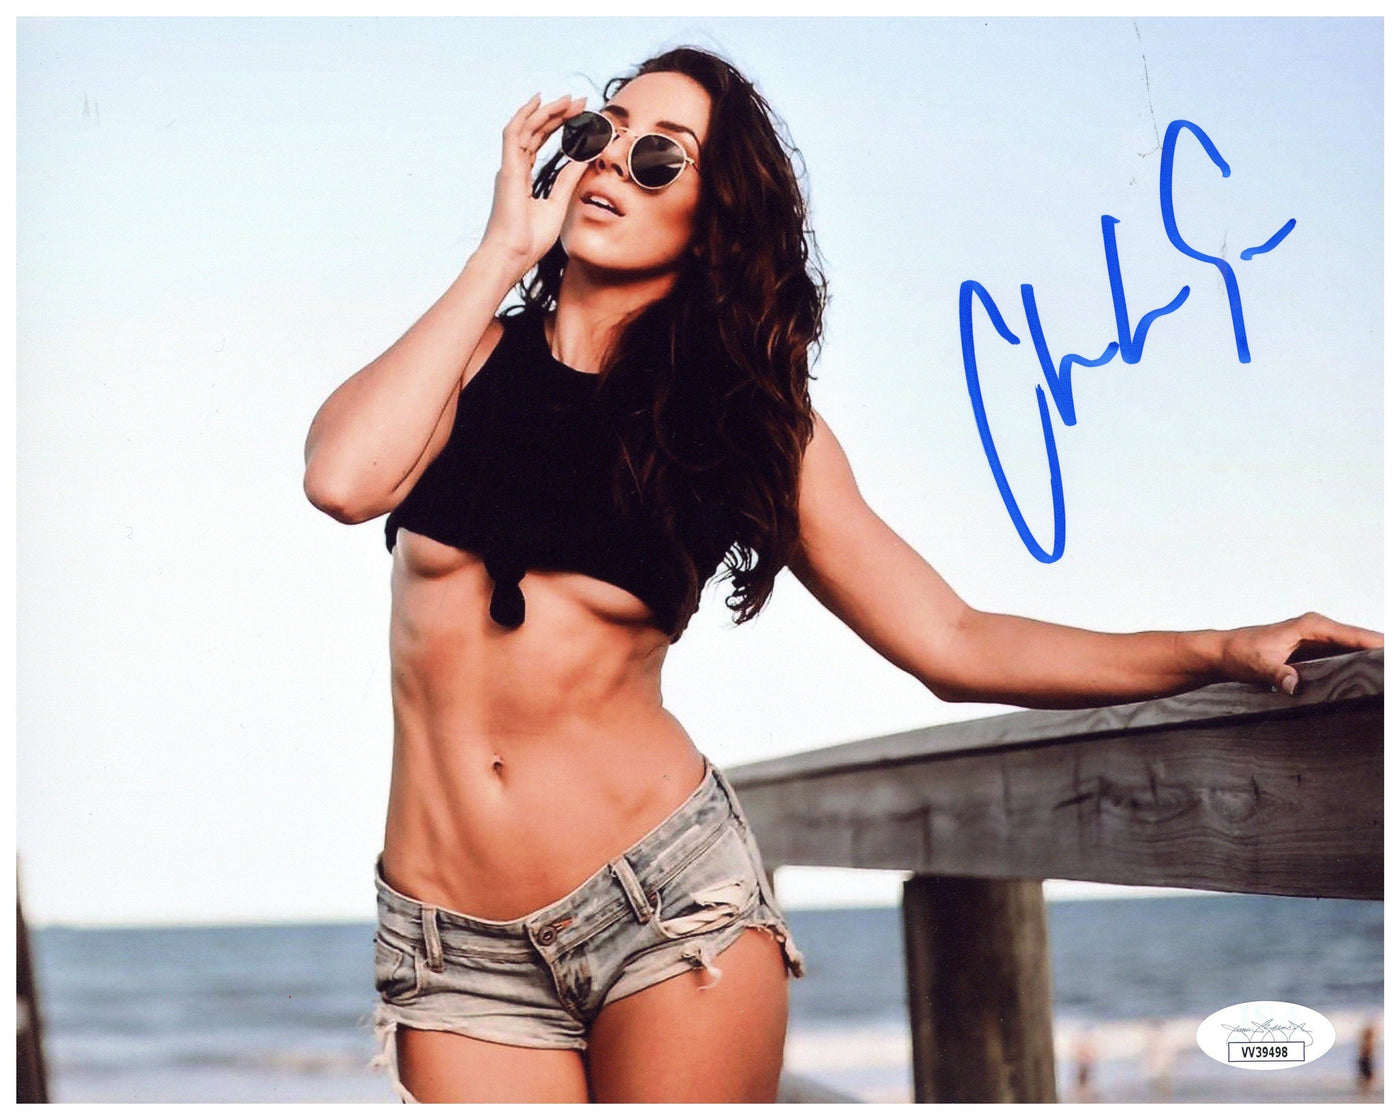 Chelsea Green Signed 8x10 Photo WWE Superstar Autographed JSA COA #4